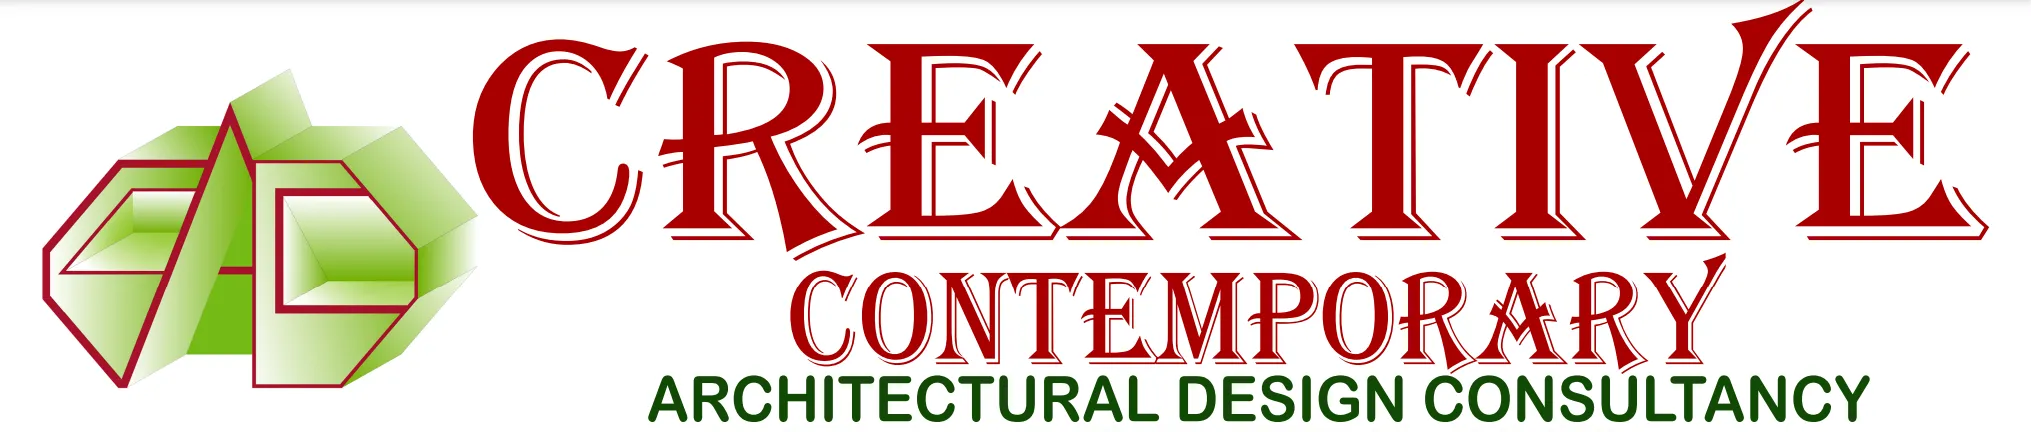 creative contemporary architectural design consultancy logo 